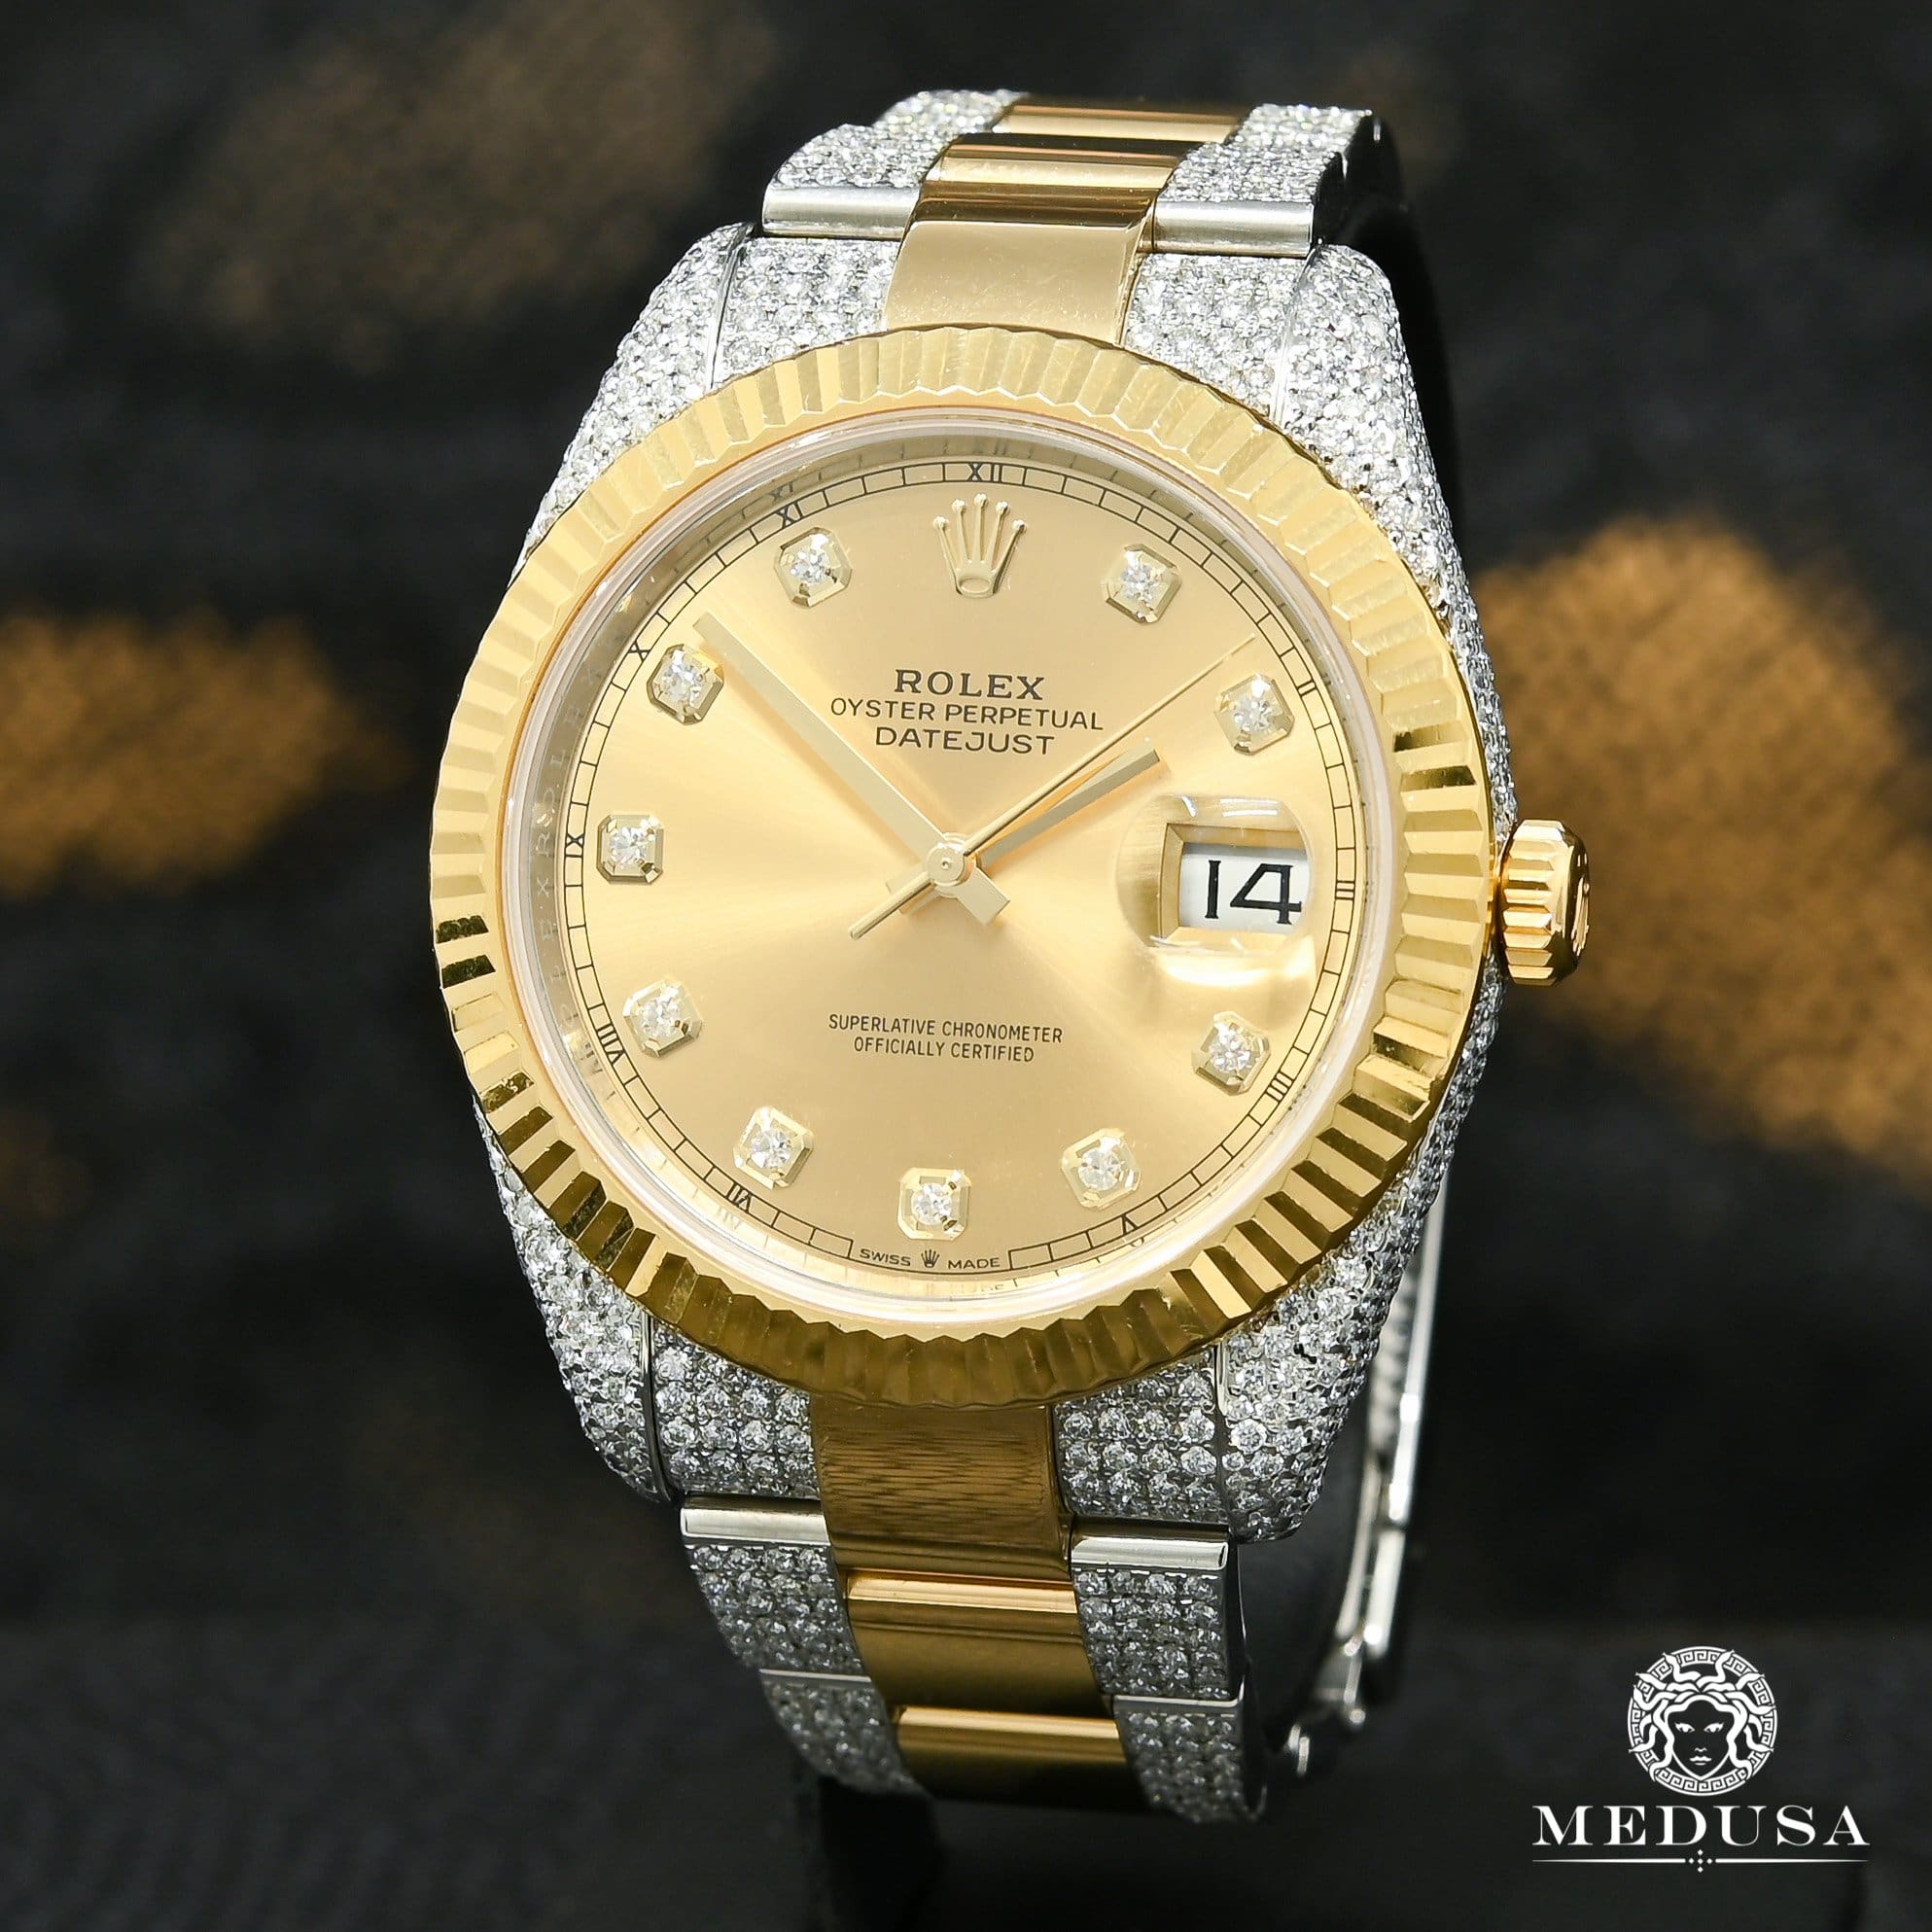 Rolex watch | Rolex Datejust Men's Watch 41mm - Champagne Fluted Iced Gold 2 Tones